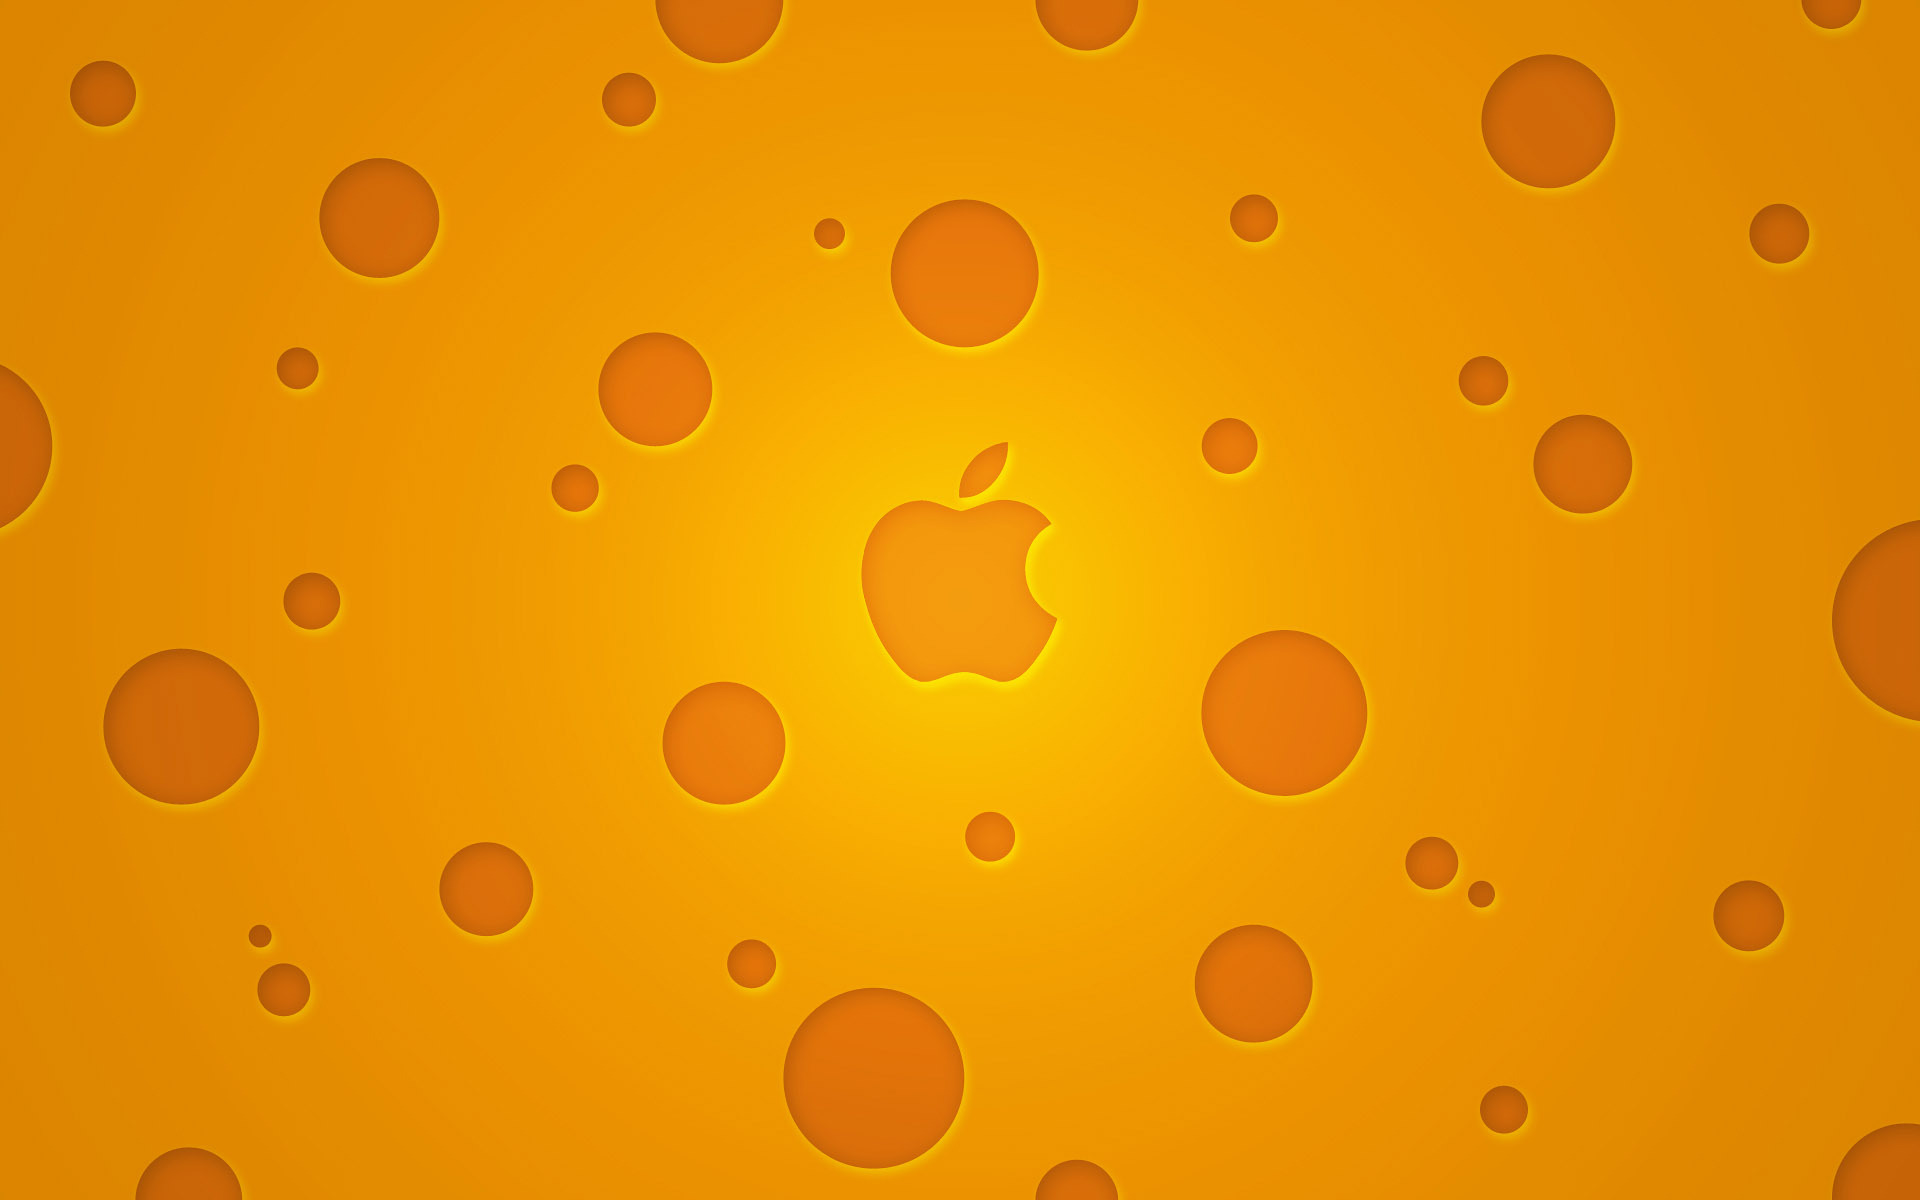 Random tech apple logo PPT Backgrounds